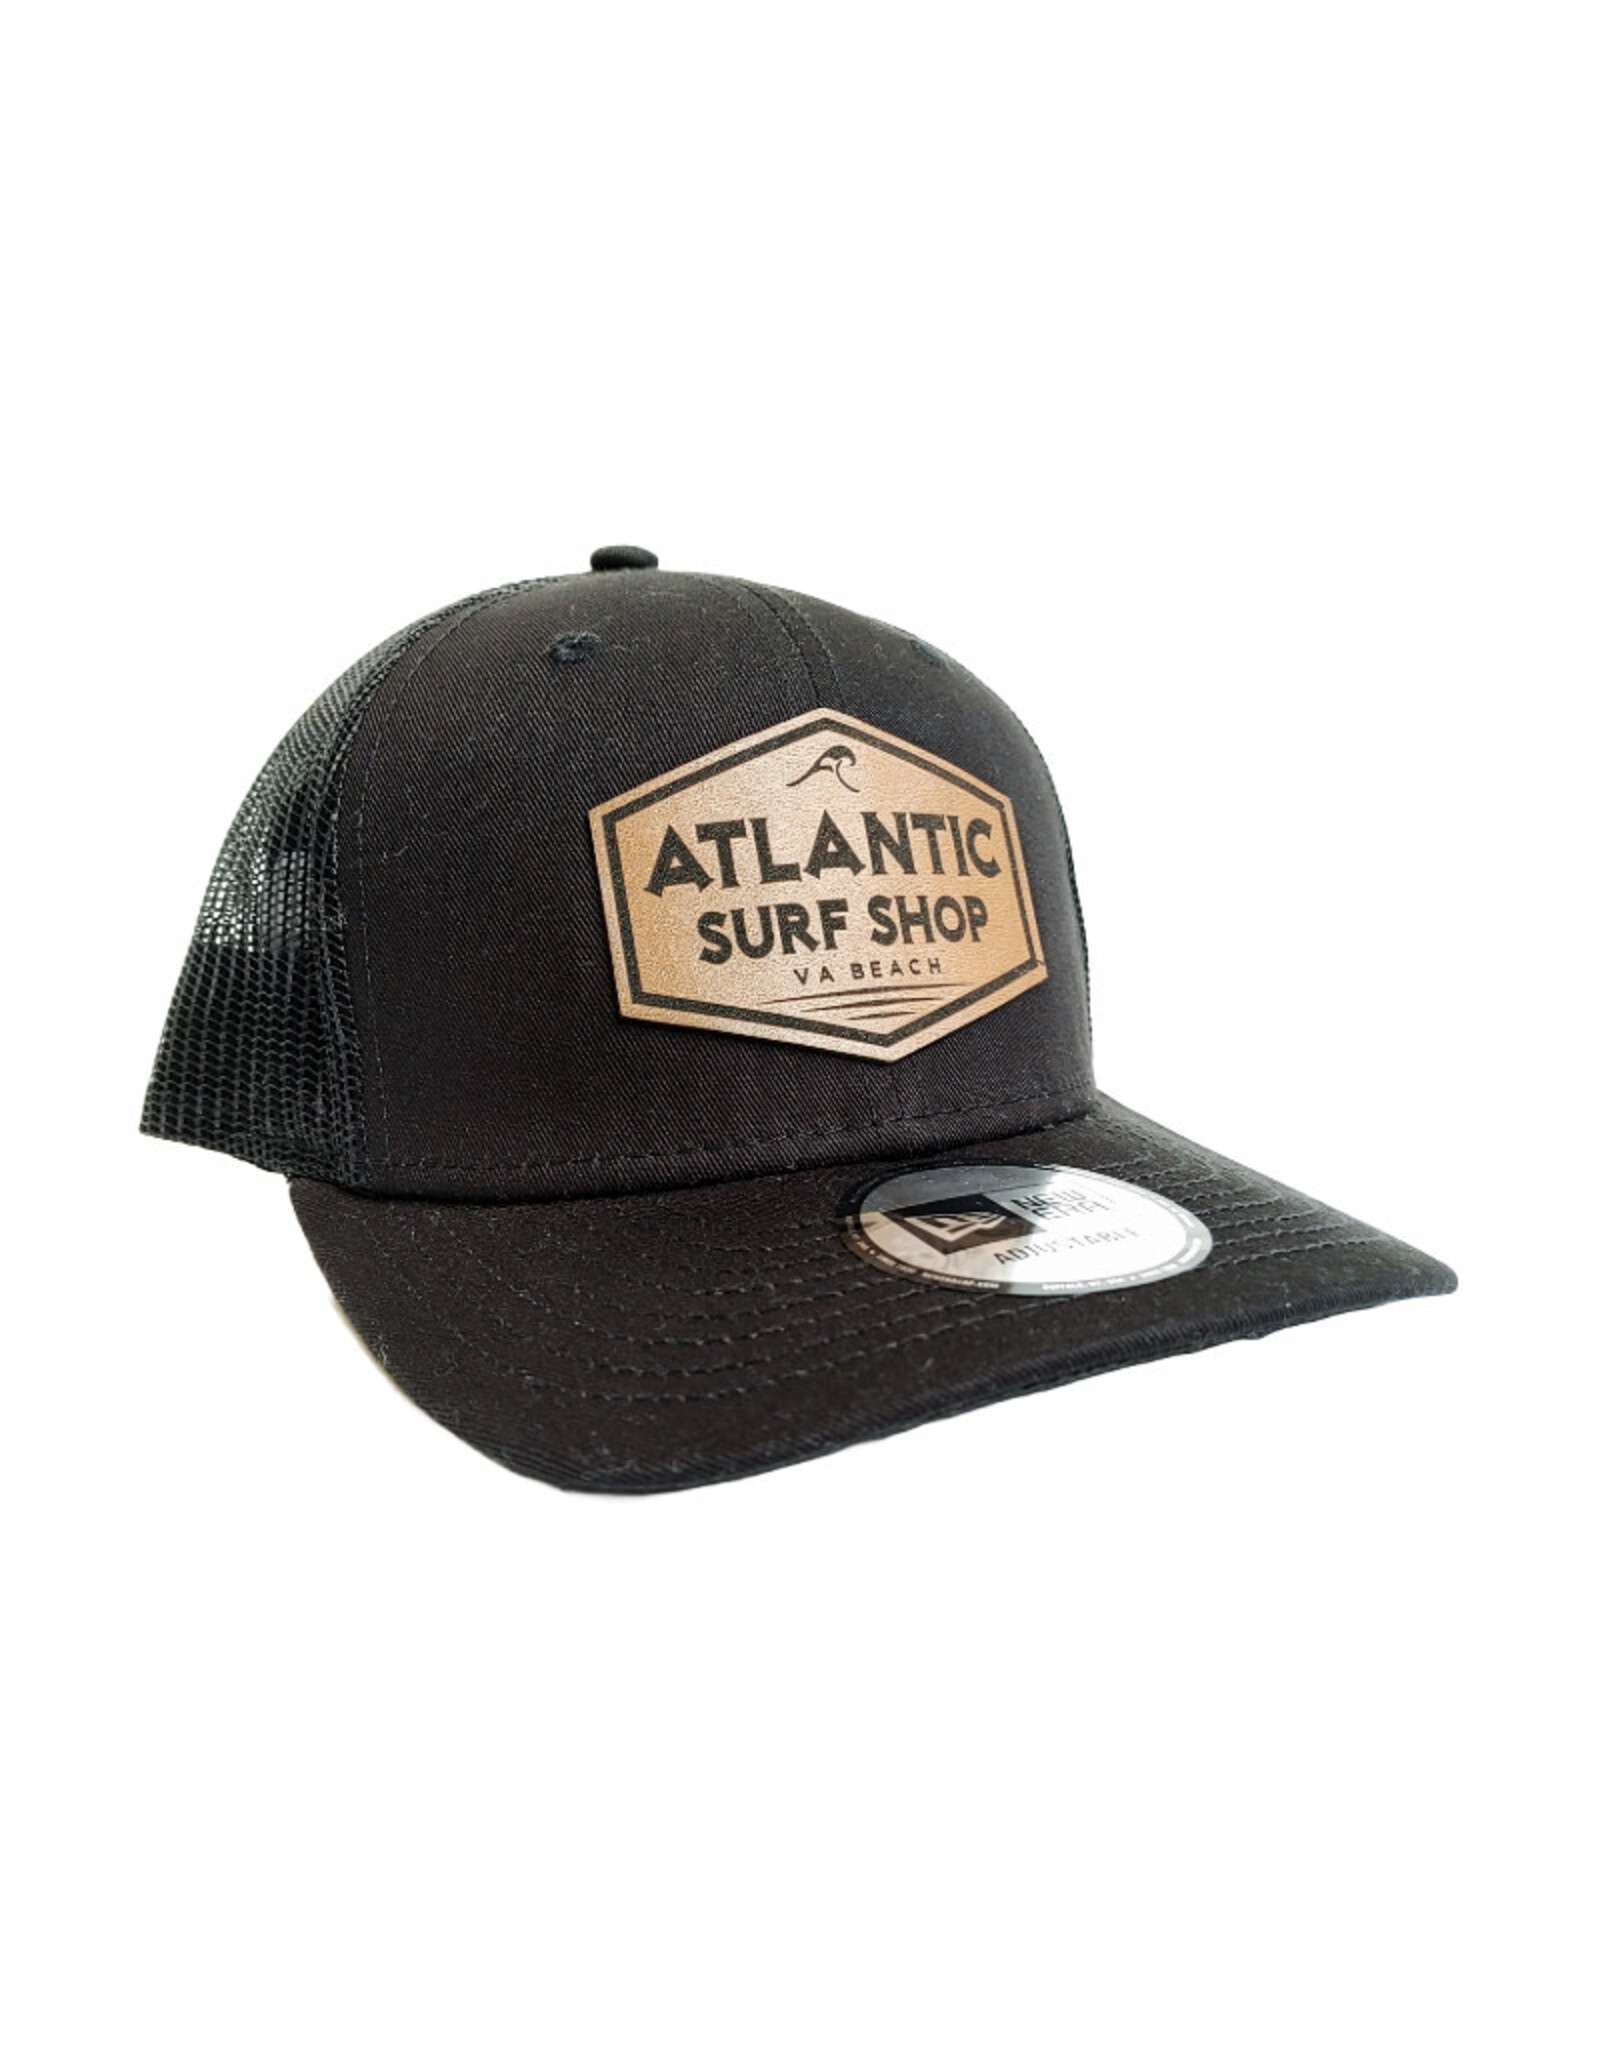 Atlantic Surf Co Atlantic Surf New Era Trucker Ball Cap Black/Black